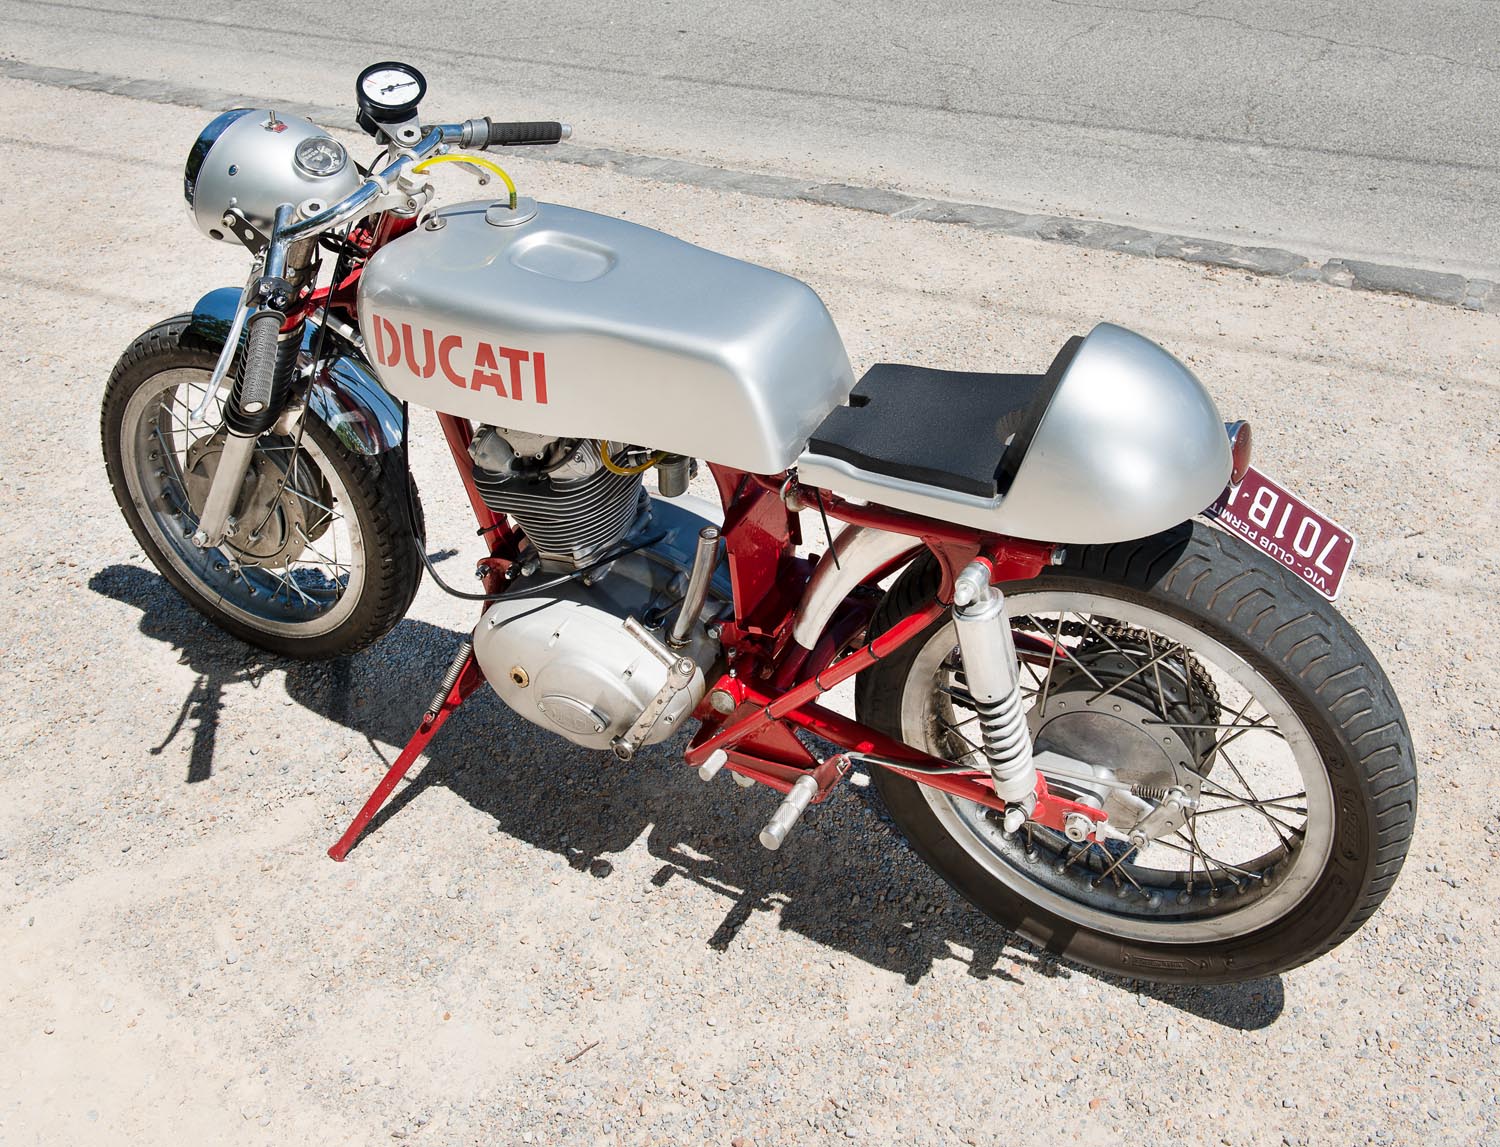 1965 Ducati 250cc - Image 2 of 3